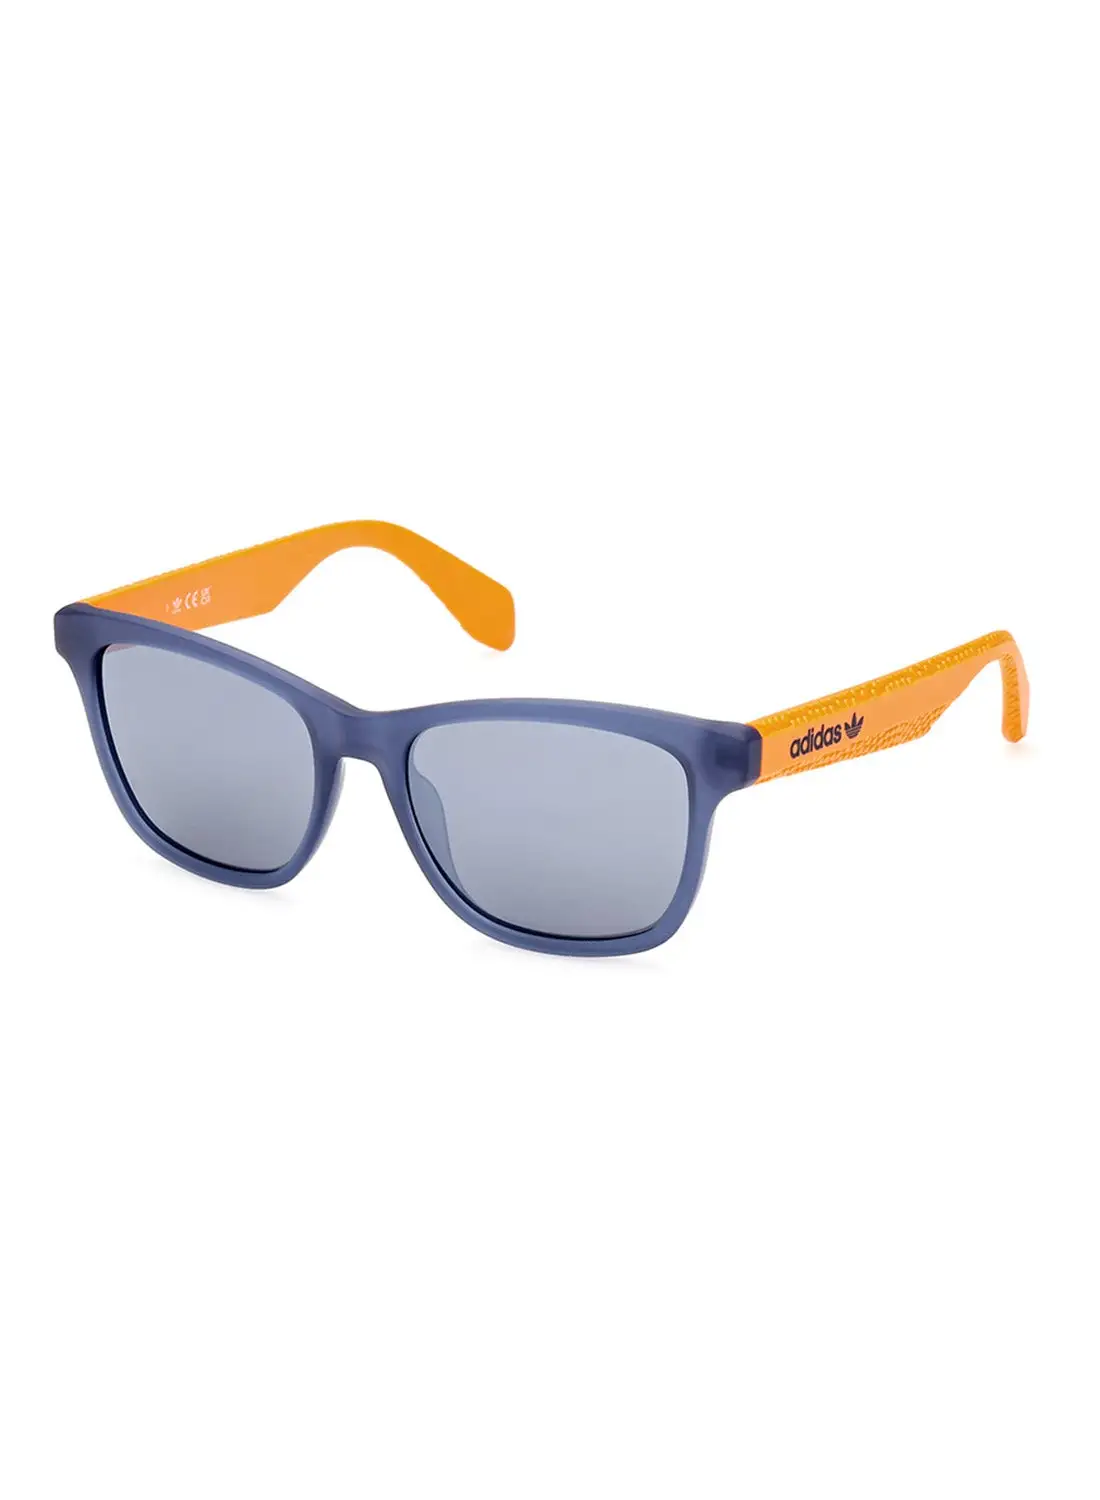 Adidas Unisex UV Protection Navigator Shape Sunglasses - OR006991C54 - Lens Size: 54 Mm